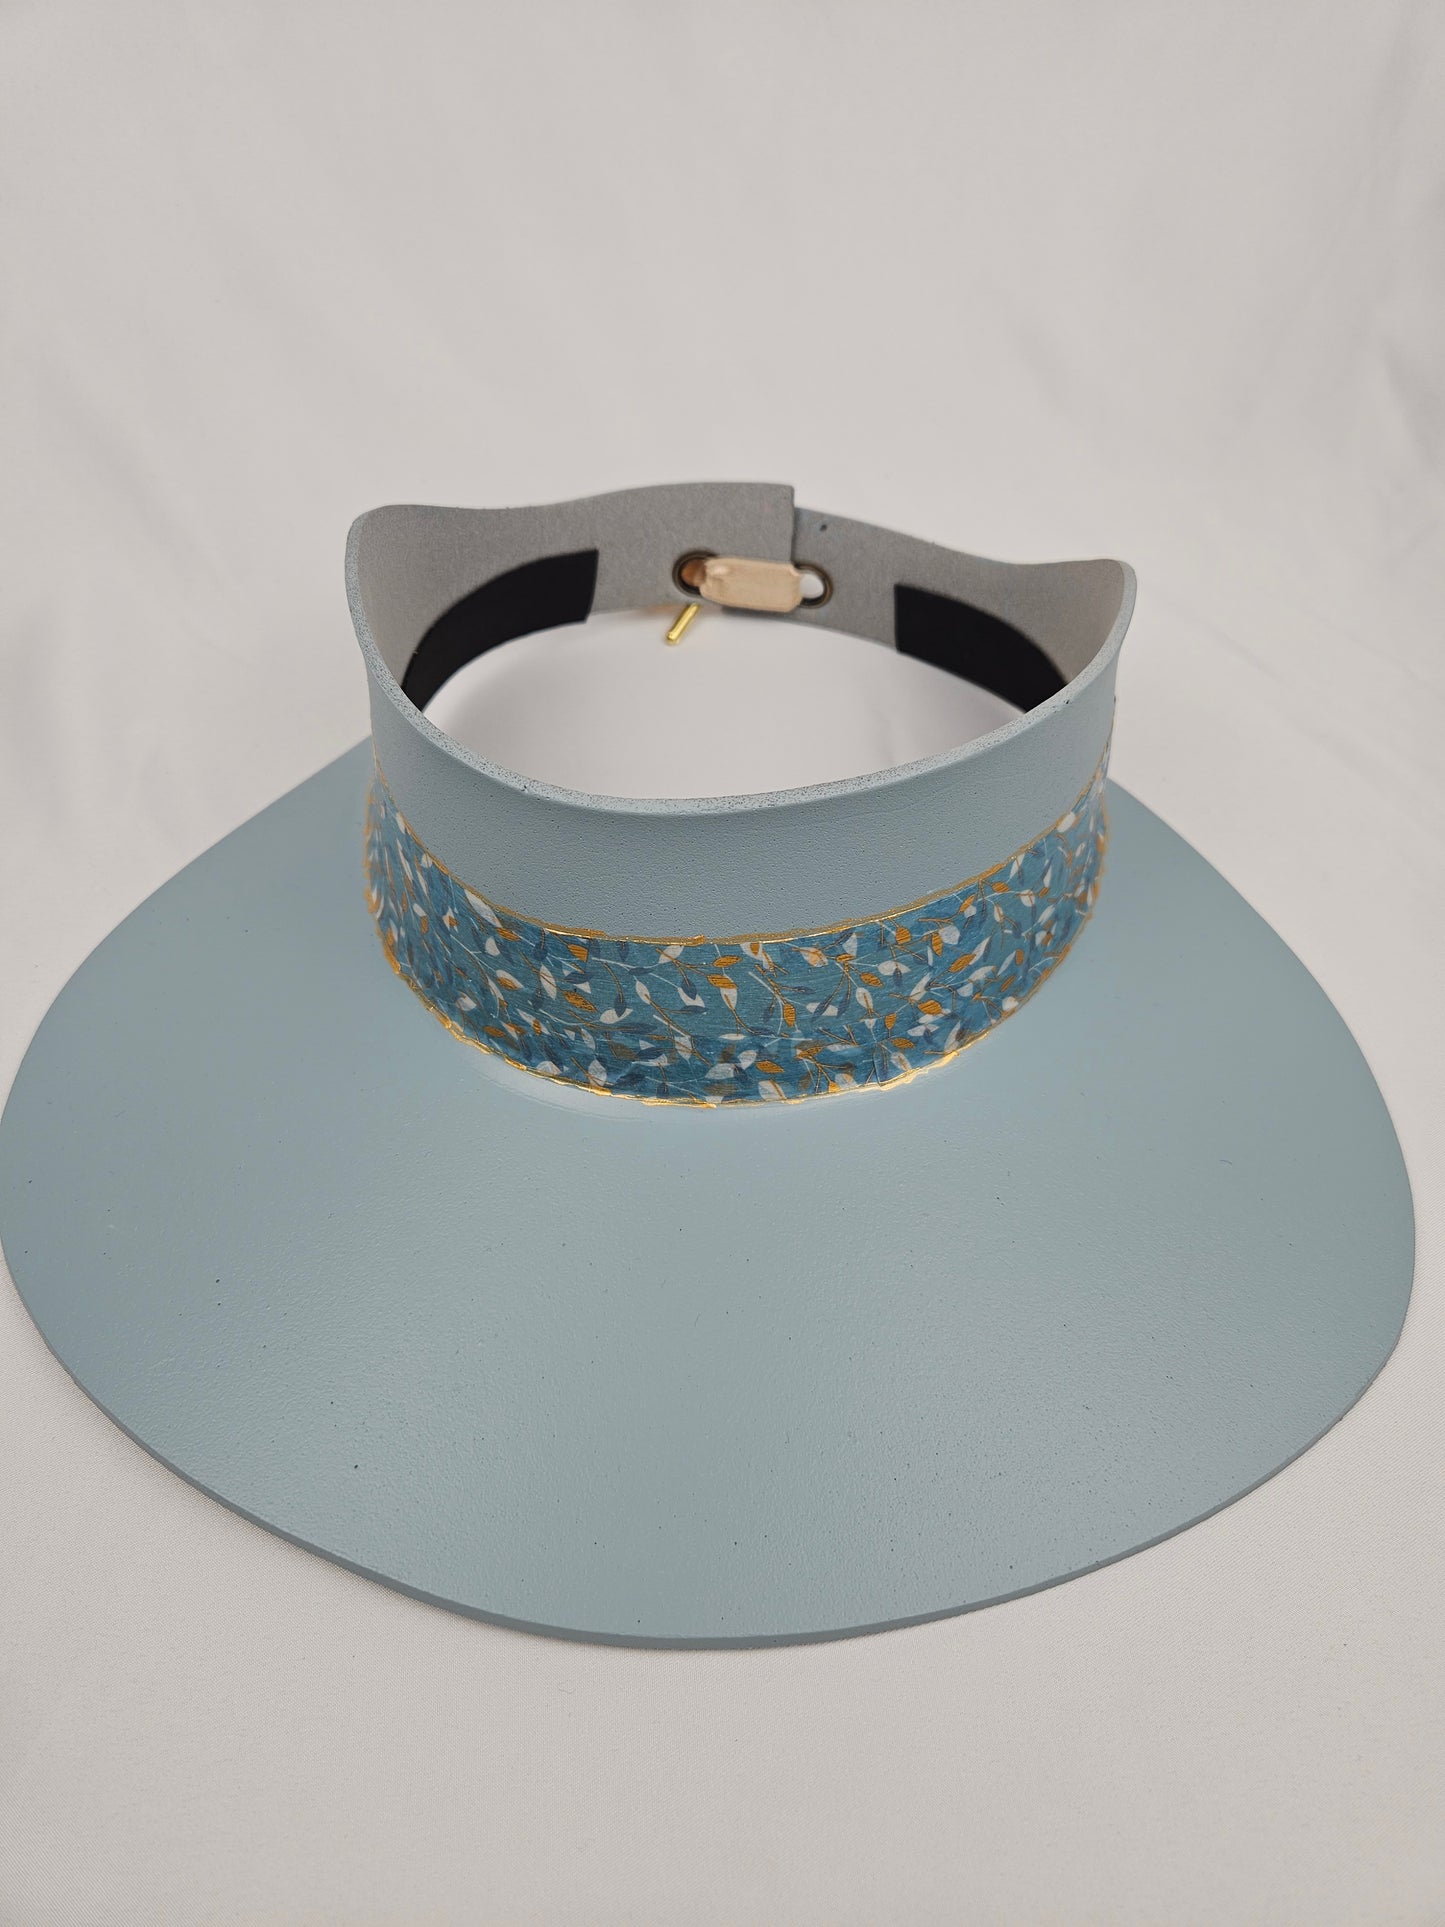 Soft Blue Audrey Sun Visor Hat with Teal Blue Floral Band: 1950s, Walks, Brunch, Asian, Golf, Easter, Church, No Headache, Derby